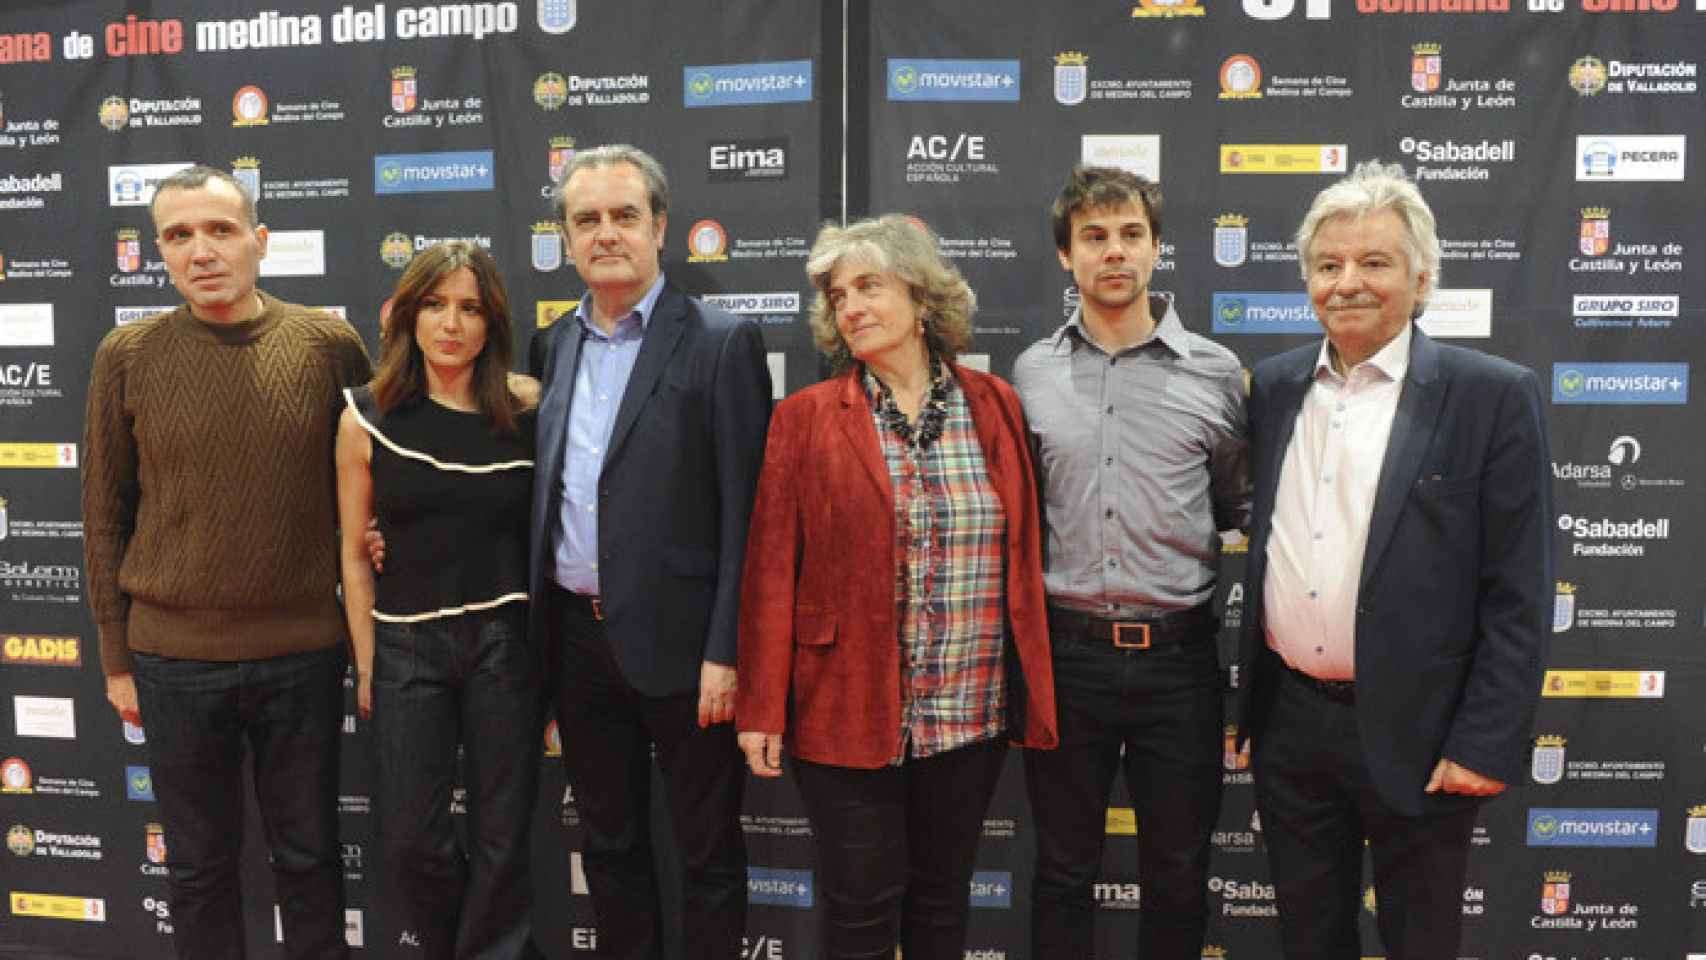 Valladolid-semana-medina-cine-presentacion